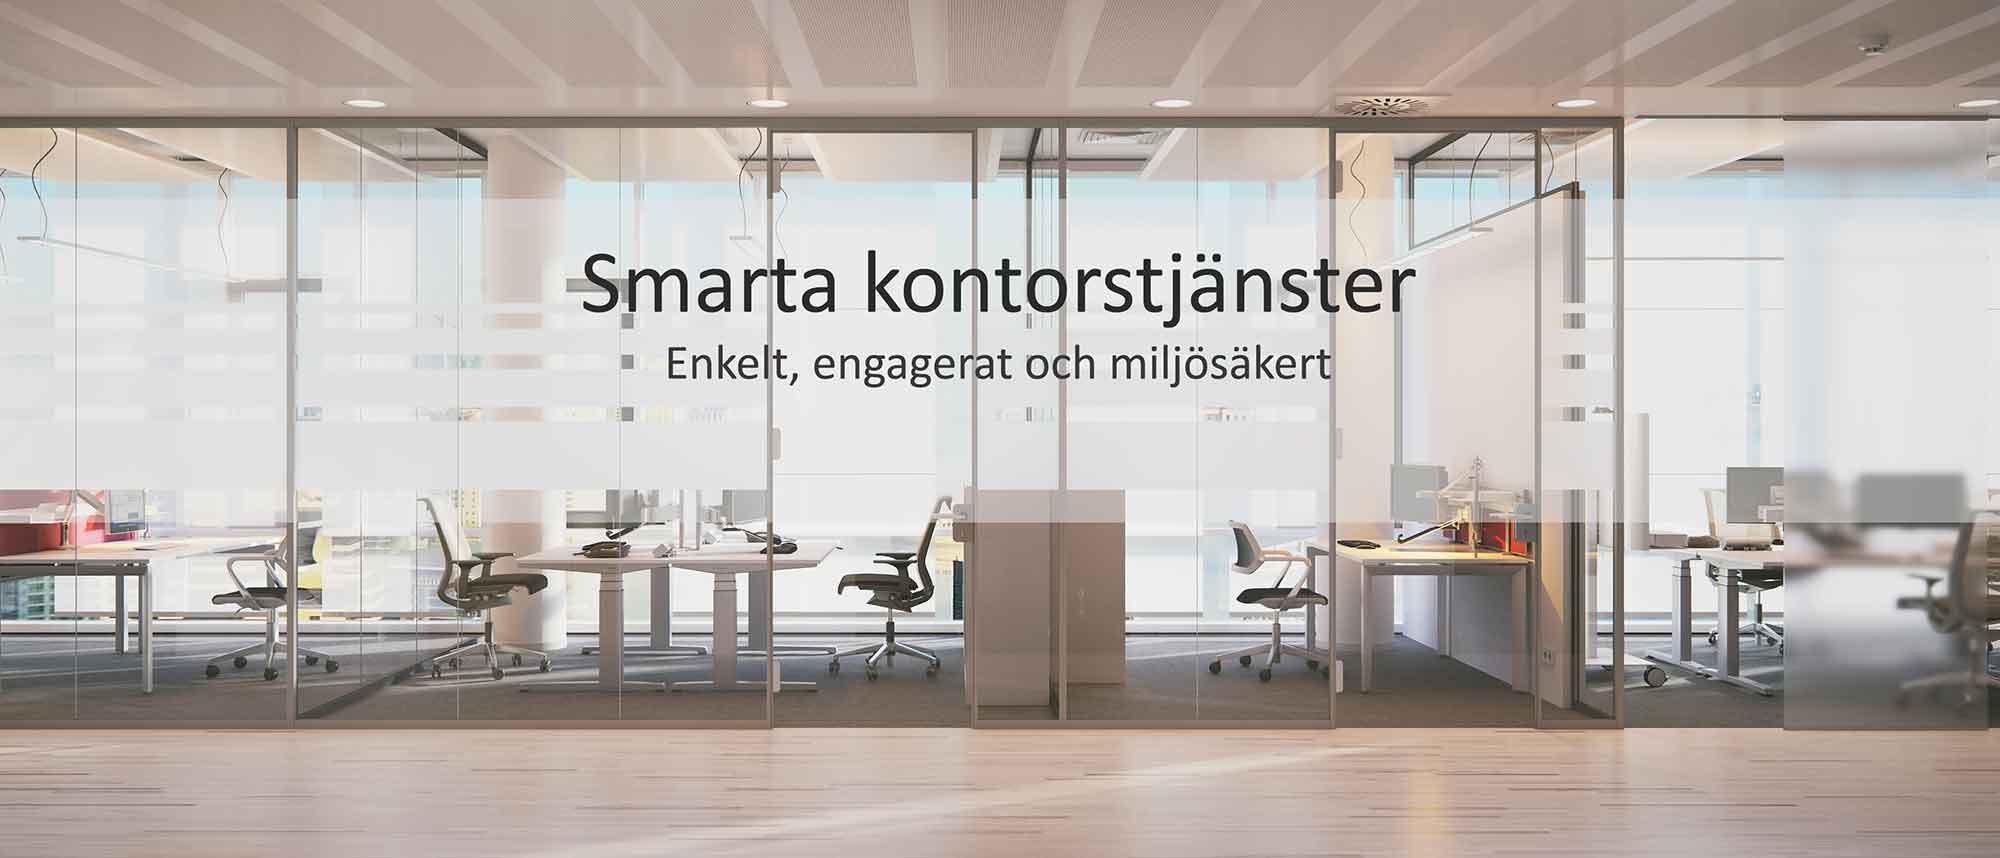 Montering av kontorsmöbler Stockholm